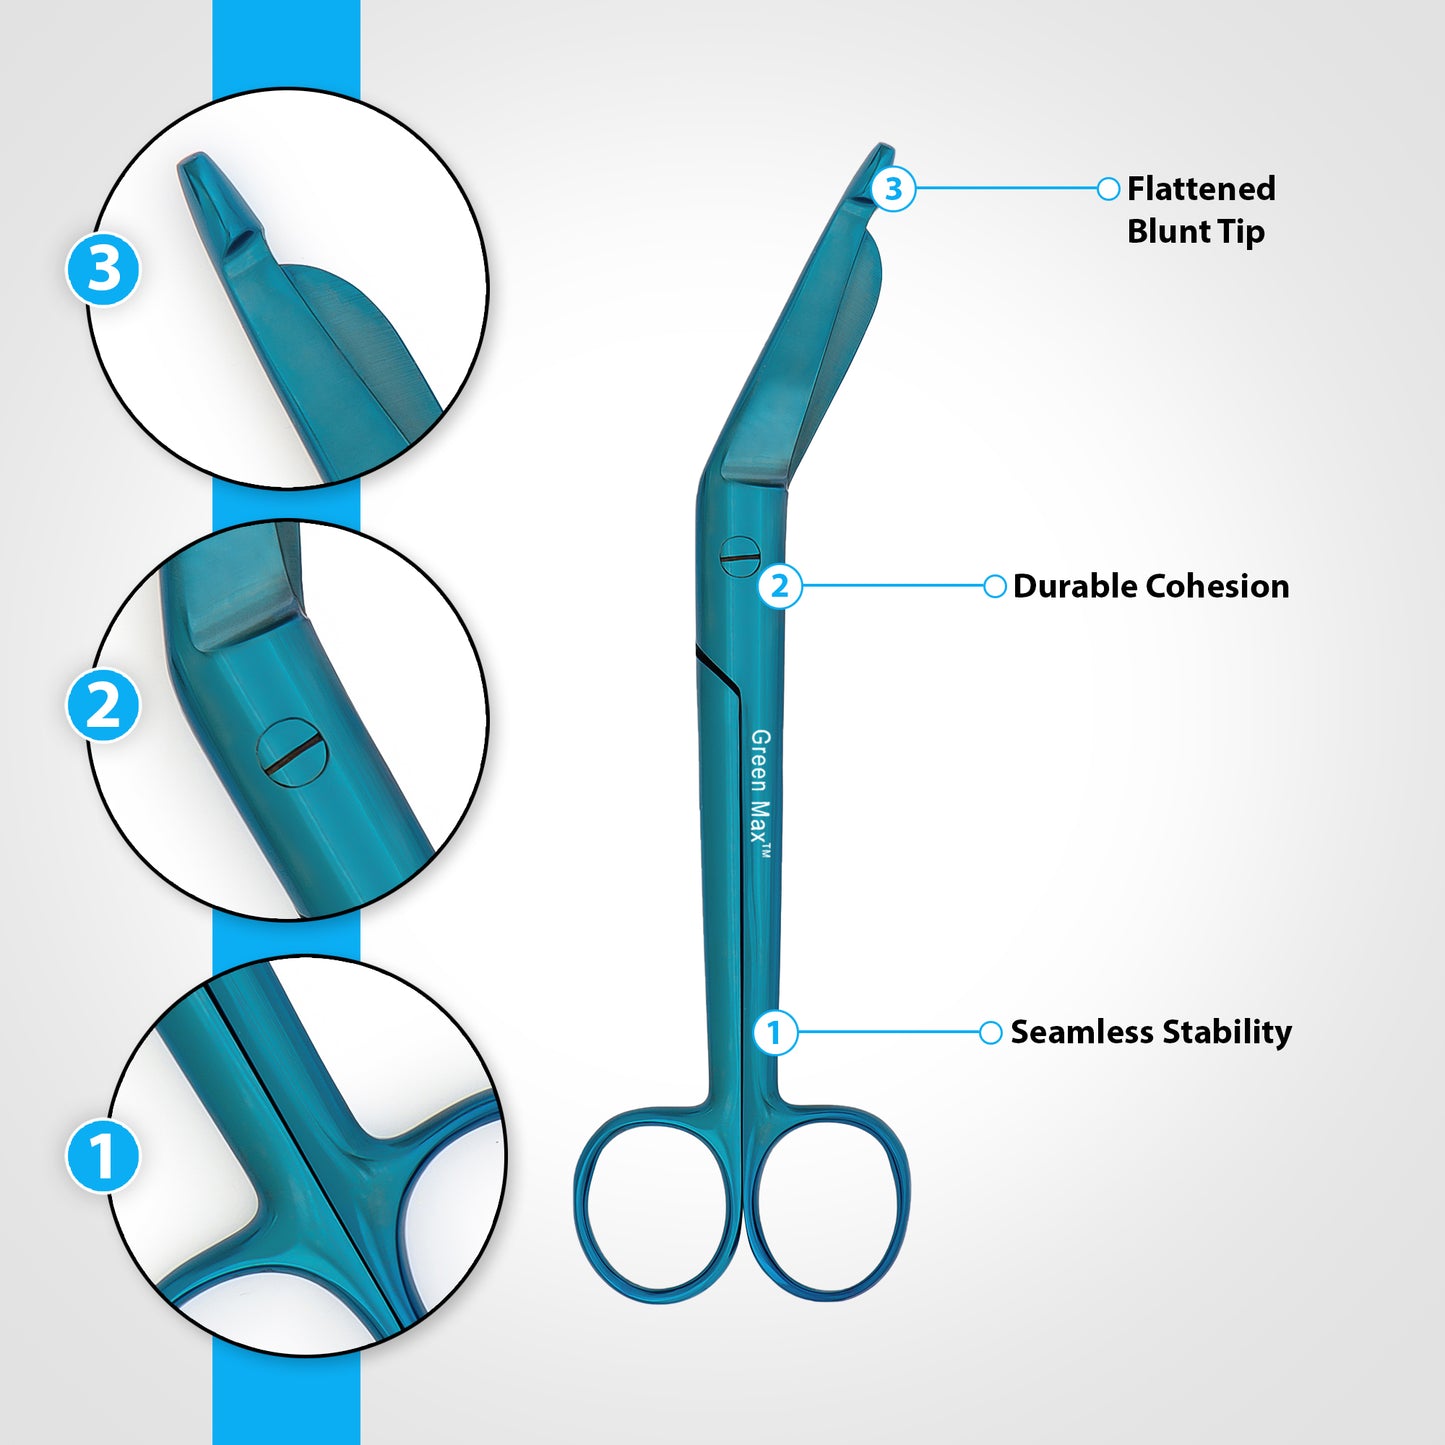 Lister Bandage Scissors, Medical and Nursing Lister Bandage Shears 5.5"